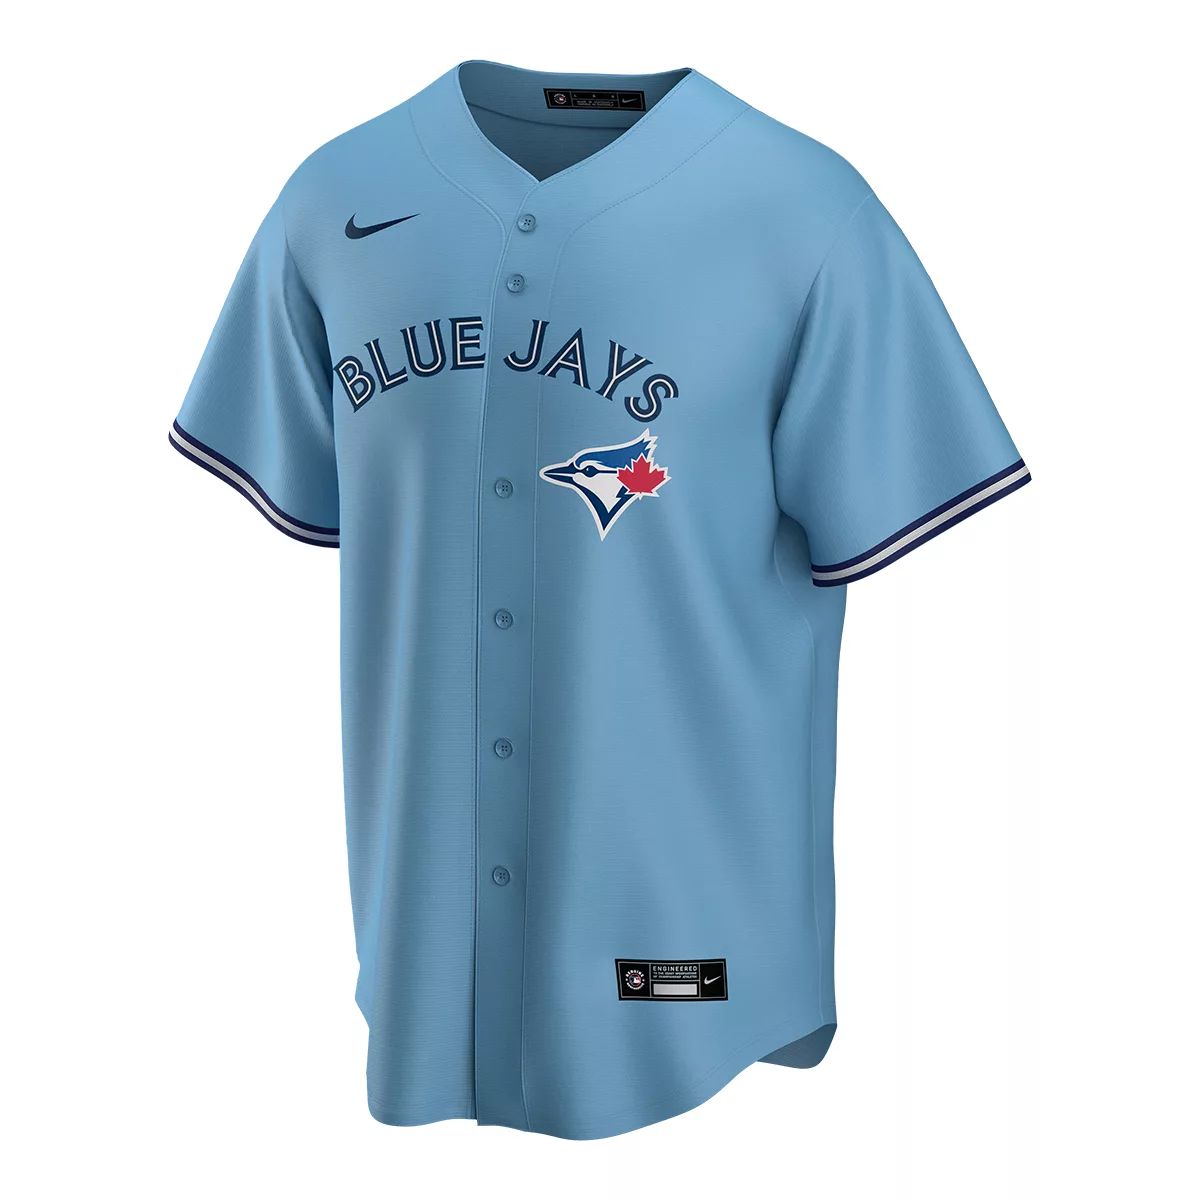 MLB Toronto Blue Jays (Bo Bichette) Men's Replica Baseball Jersey.